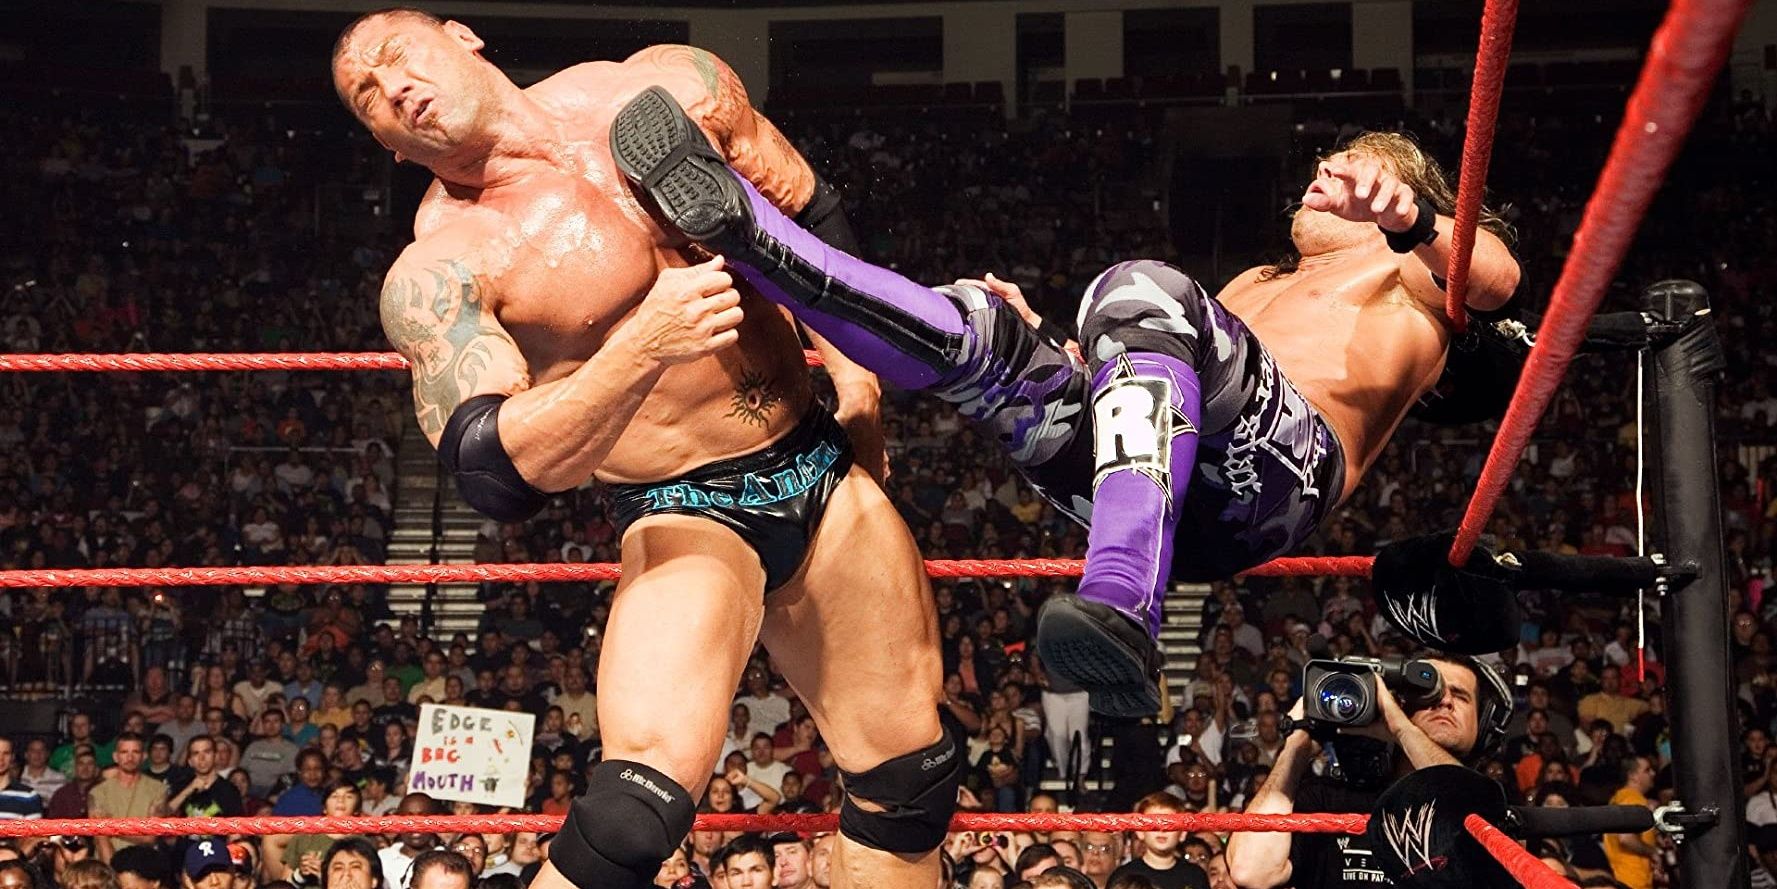 Edge had the upper hand over Batista